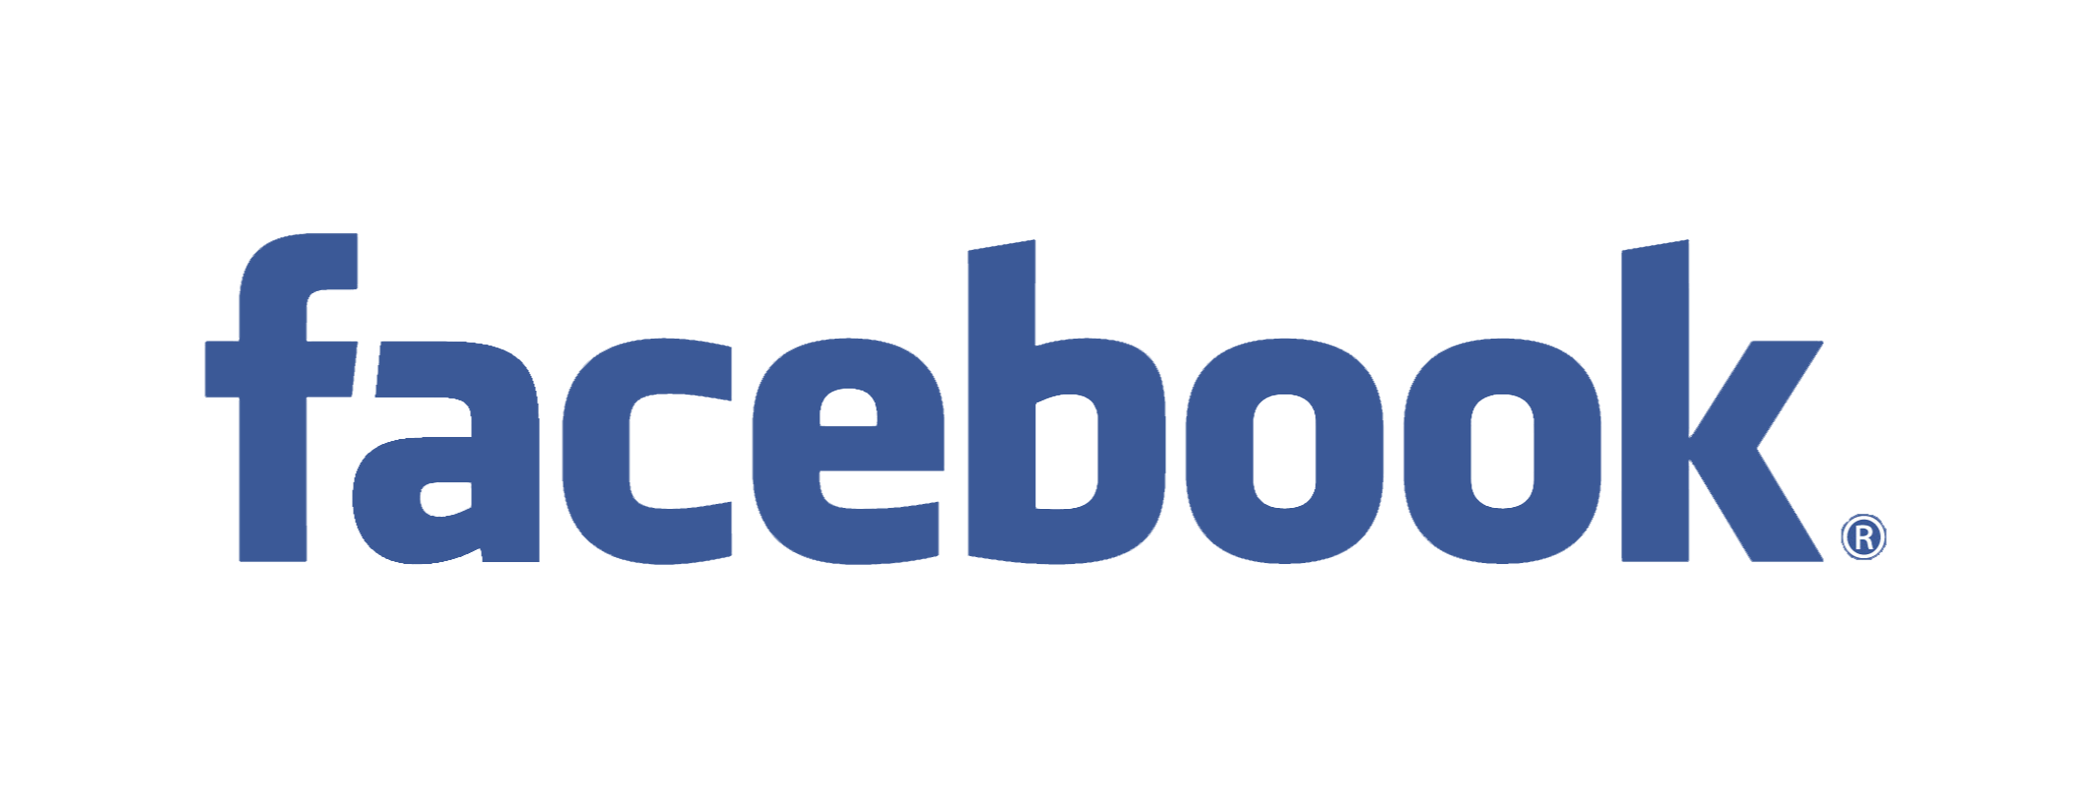 facebook-logo-reversed.png